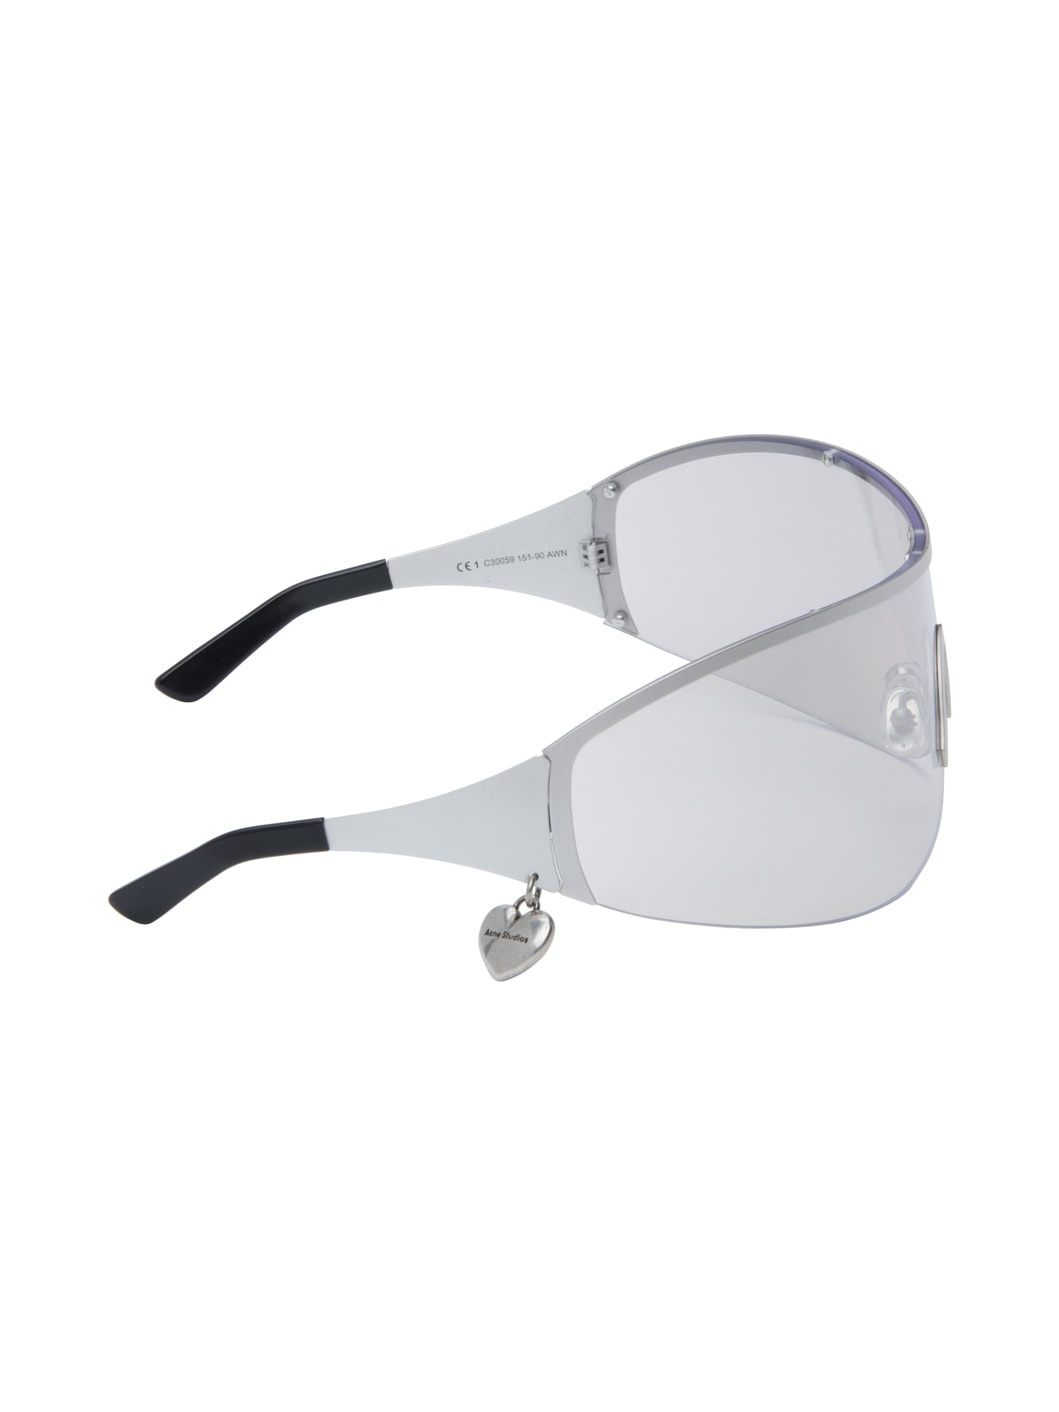 Silver Metal Frame Sunglasses - 2